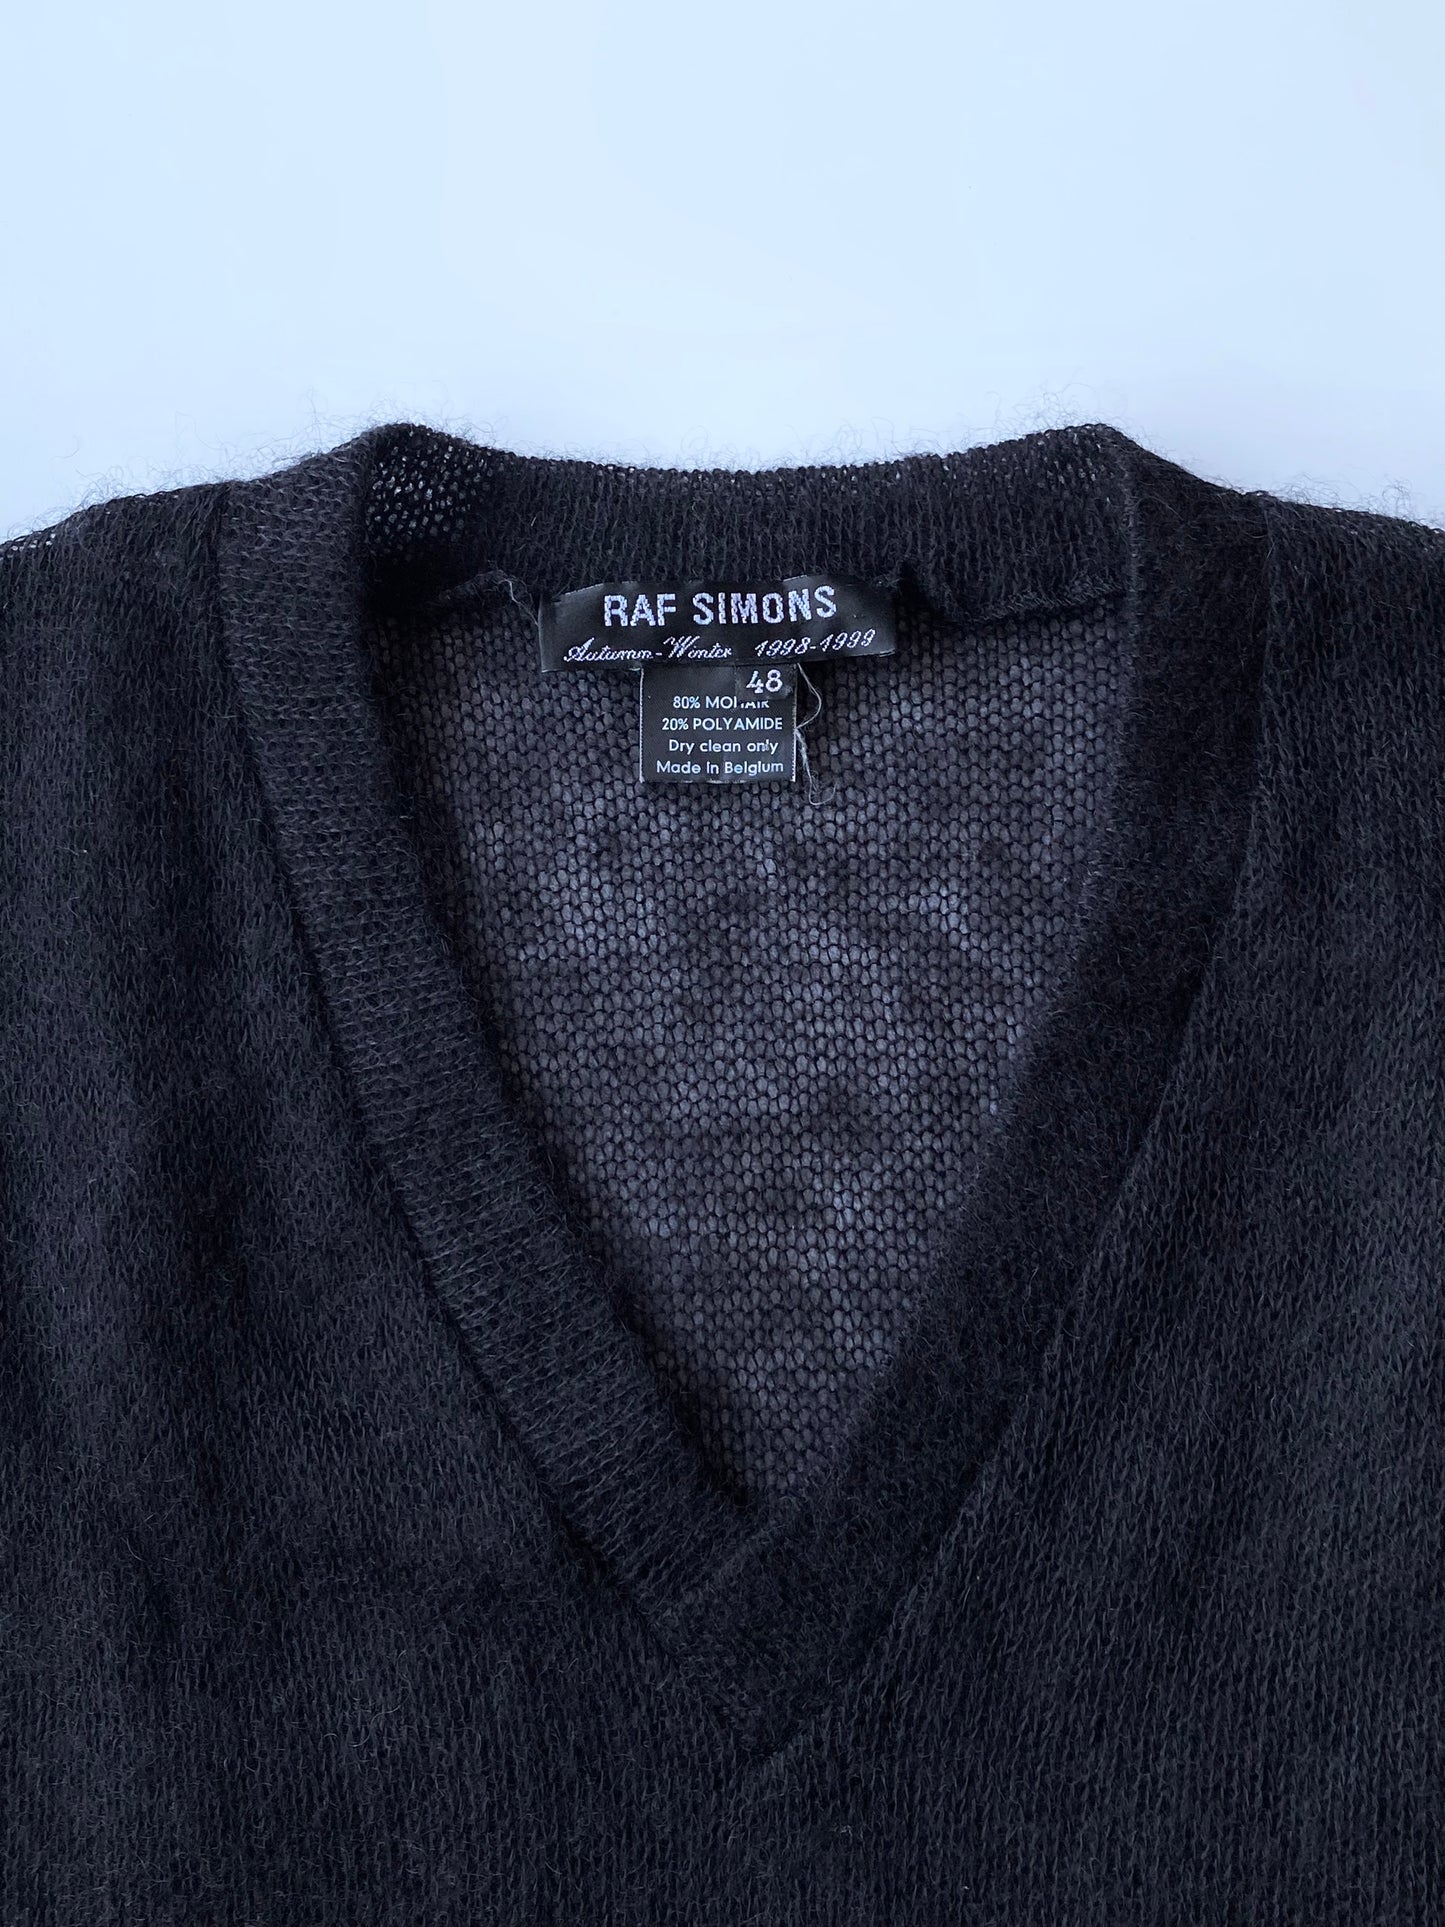 Raf Simons F/W 1998-1999 Mohair Knitted Vest – Obsidian